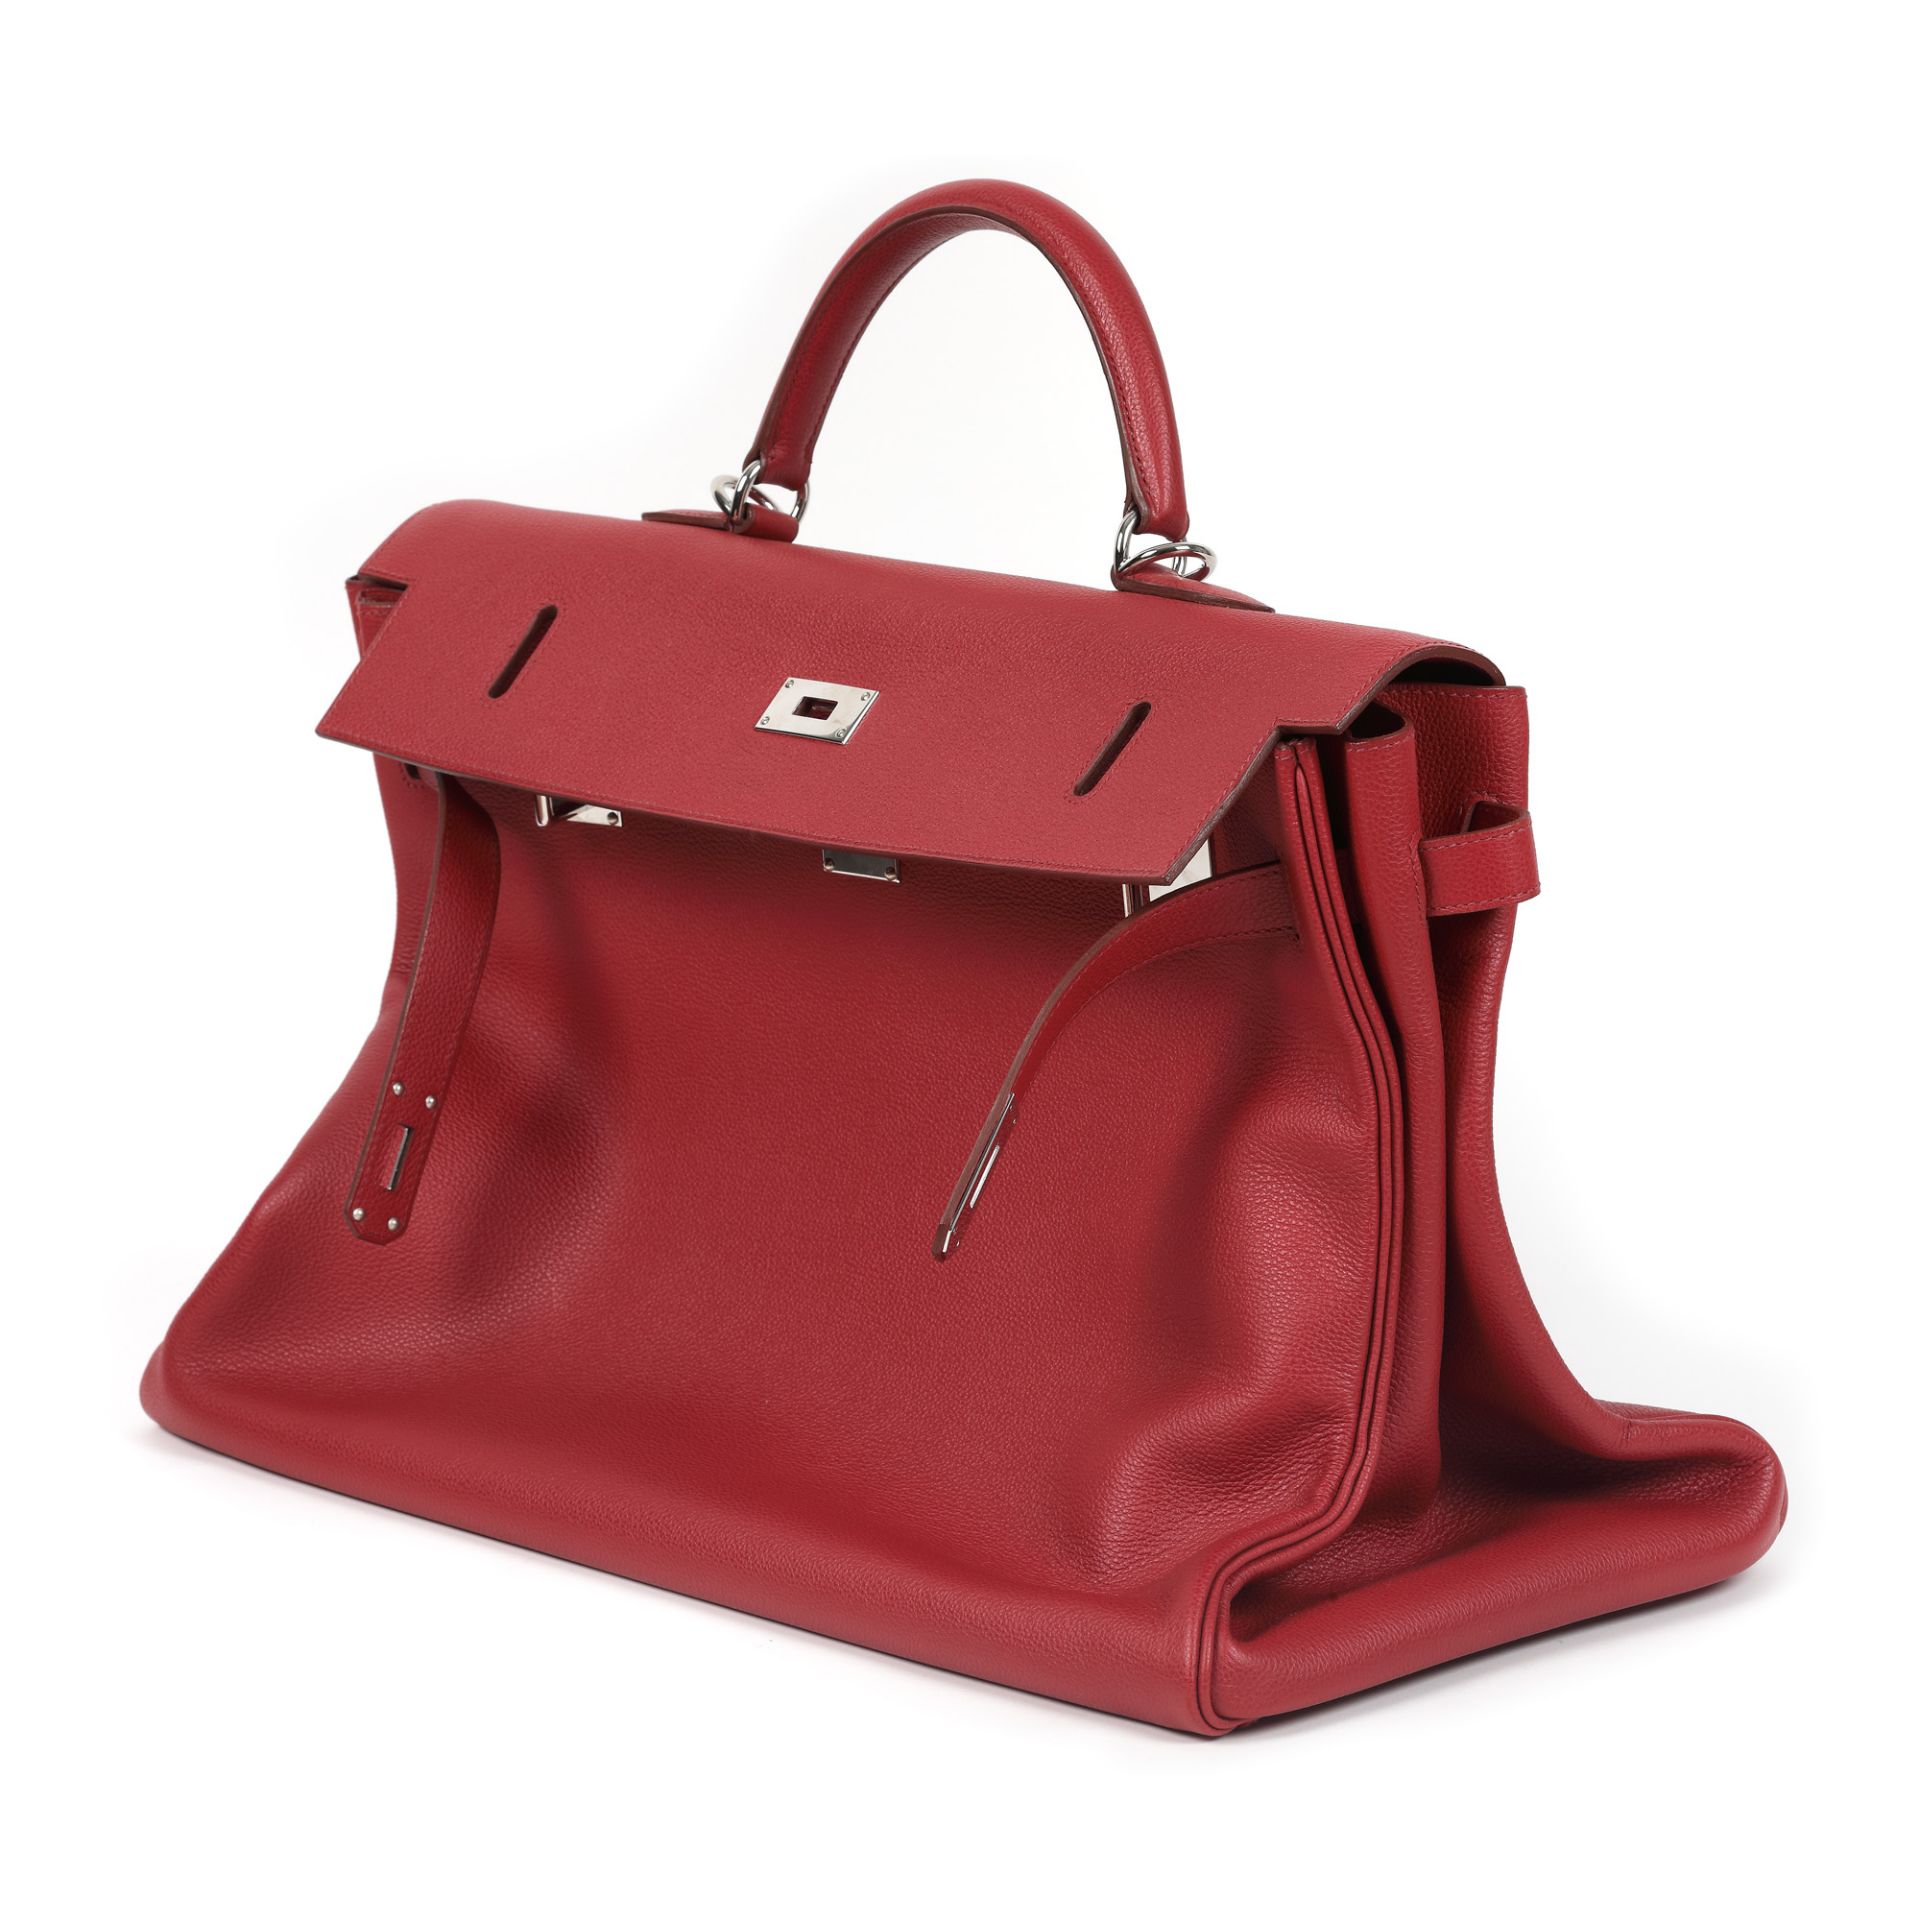 "Kelly Voyage" - Hermès travel bag, Clemence leather, Rouge Garance colour, limited edition - Bild 3 aus 4